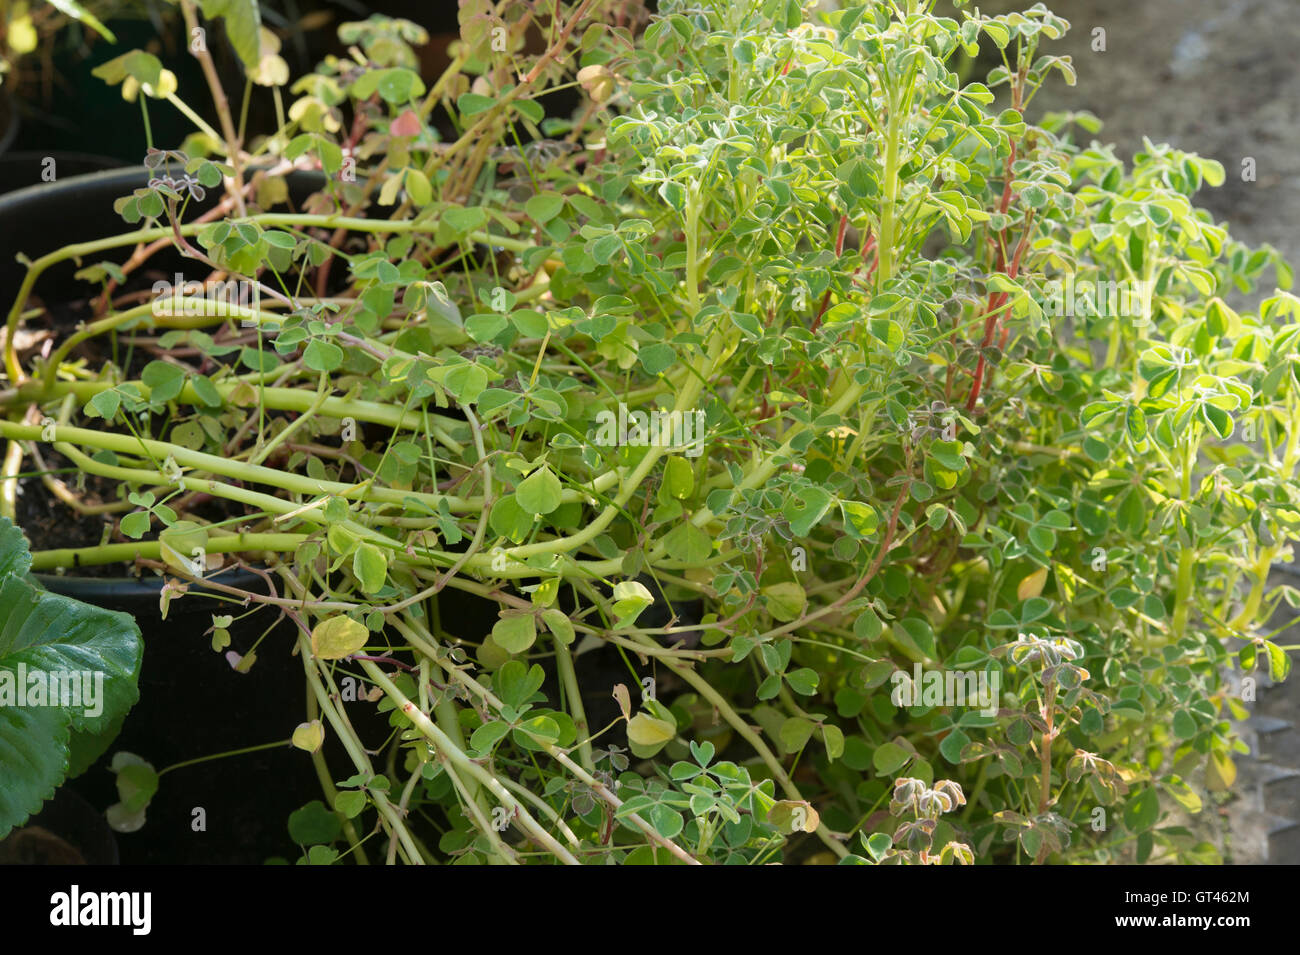 Oxalis tuberosa. Oca plant growing in a plant pot. UK Stock Photo